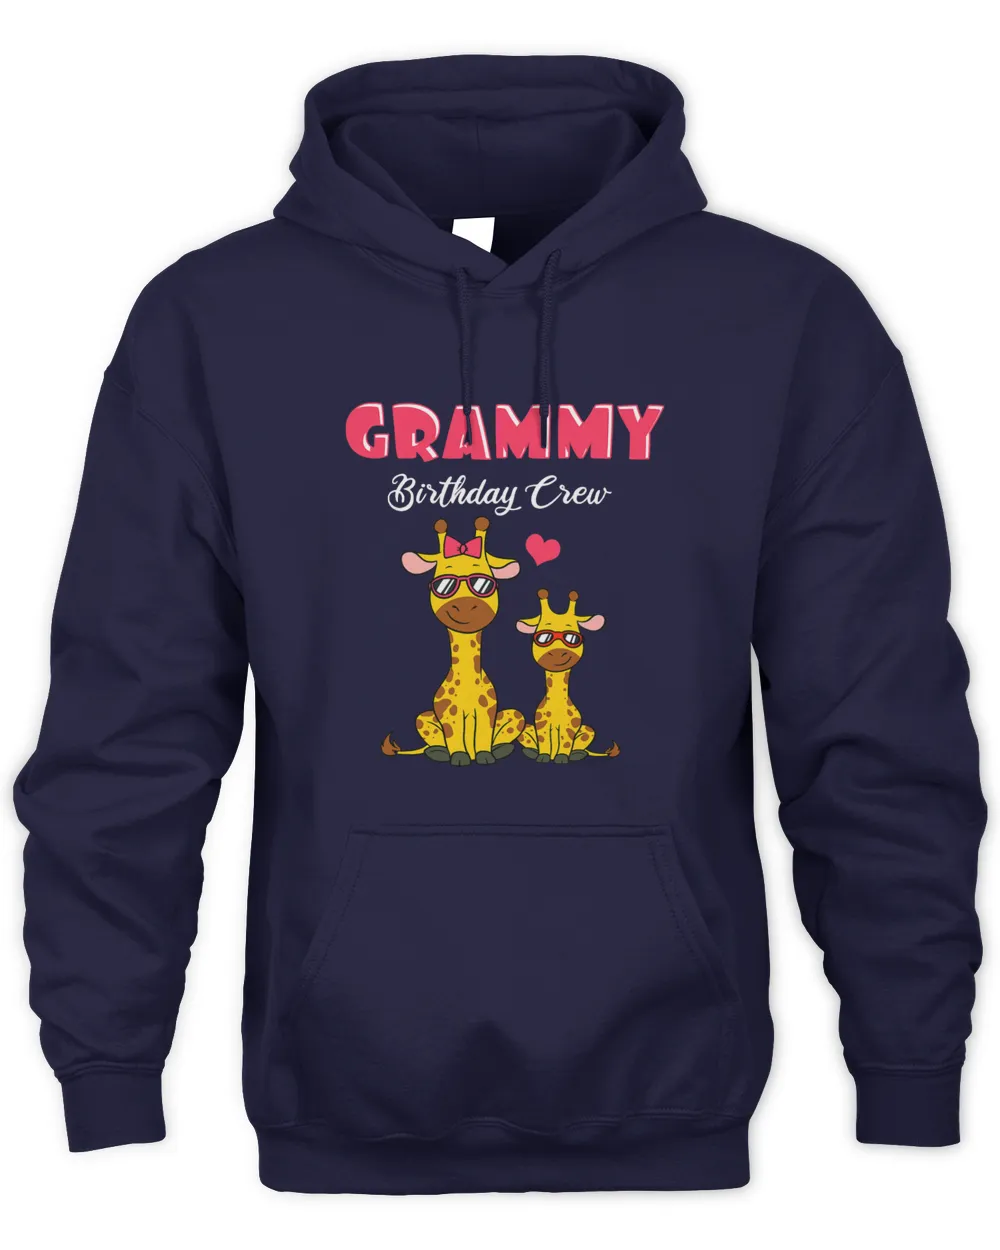 Grammy Birthday Crew Grandma Matching Family Bday Outfit